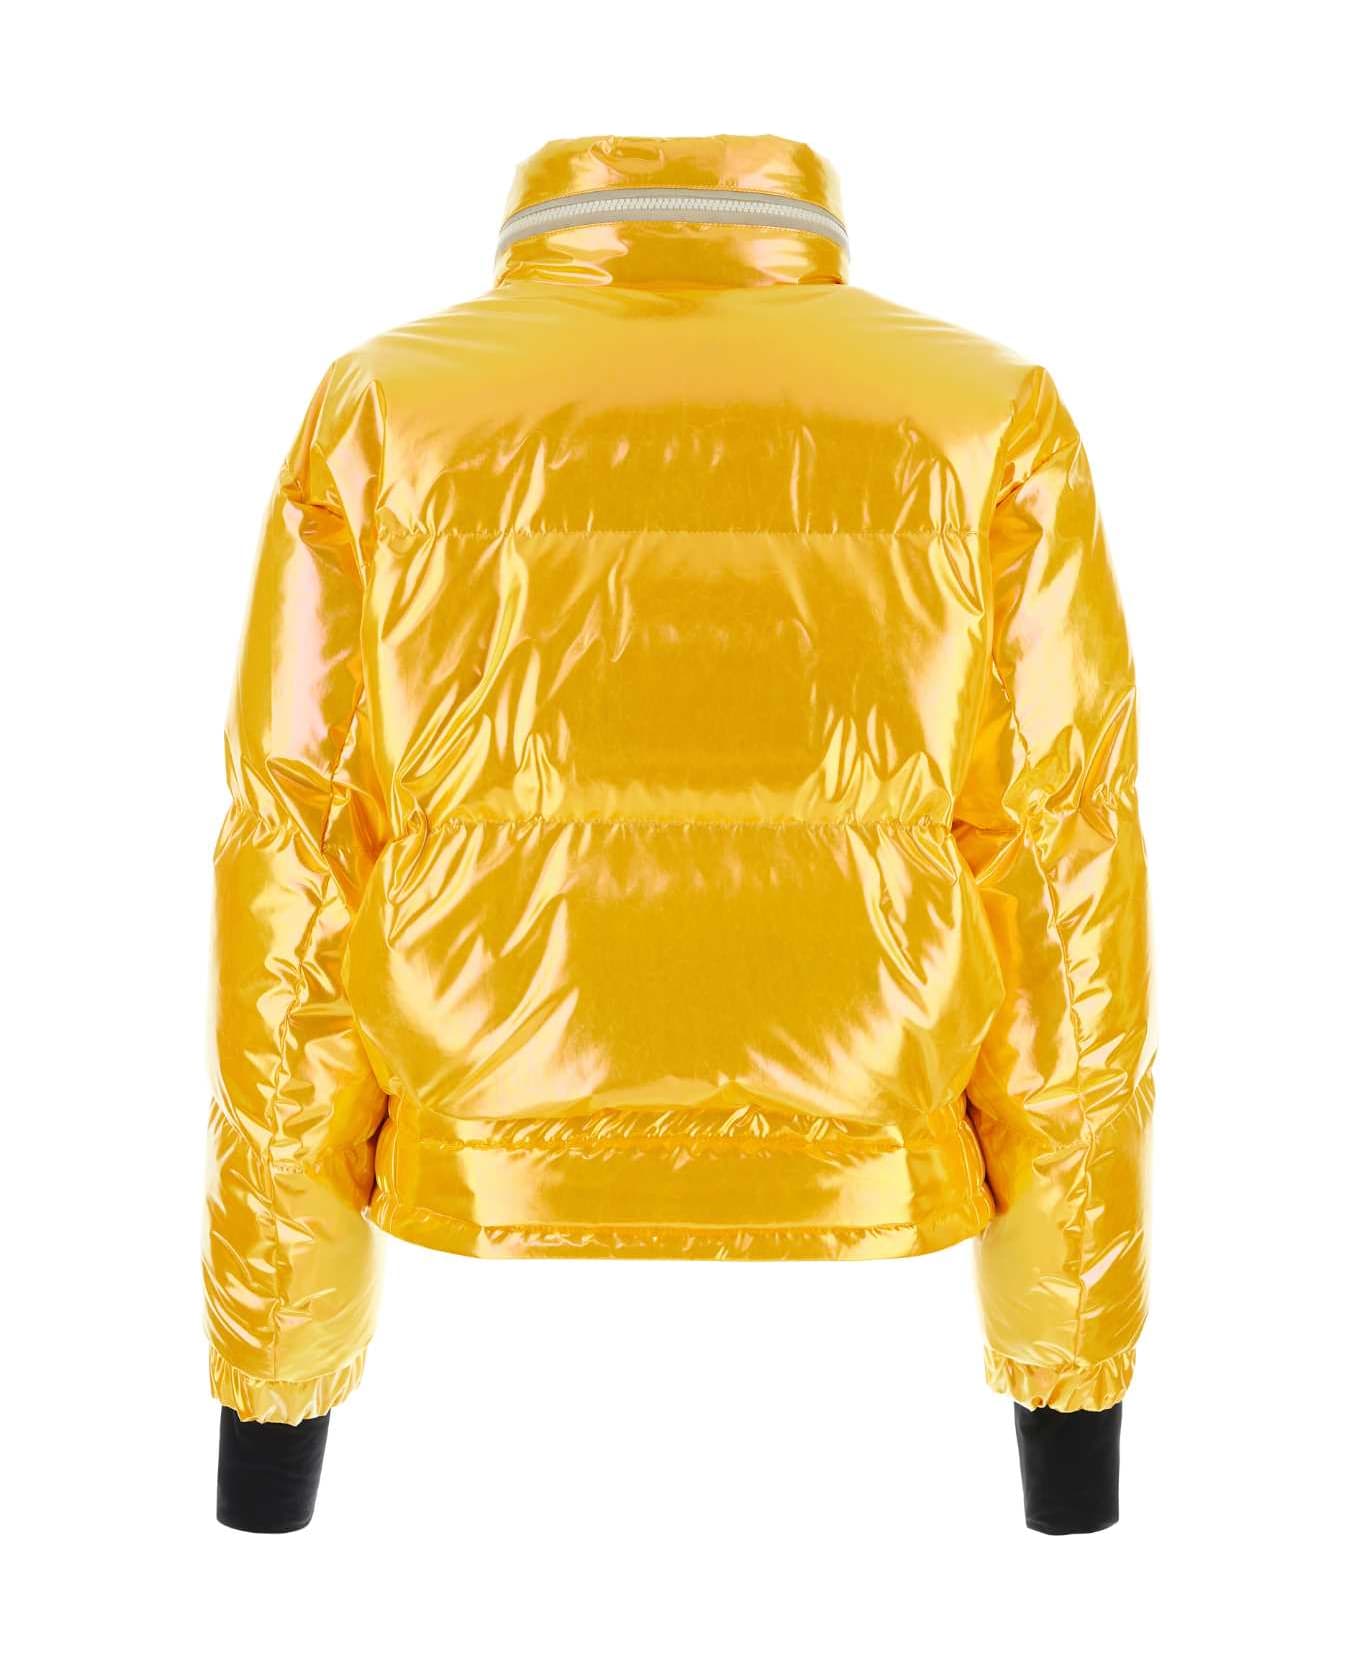 Moncler Grenoble Yellow Polyester Biche Down Jacket - M10 ジャケット